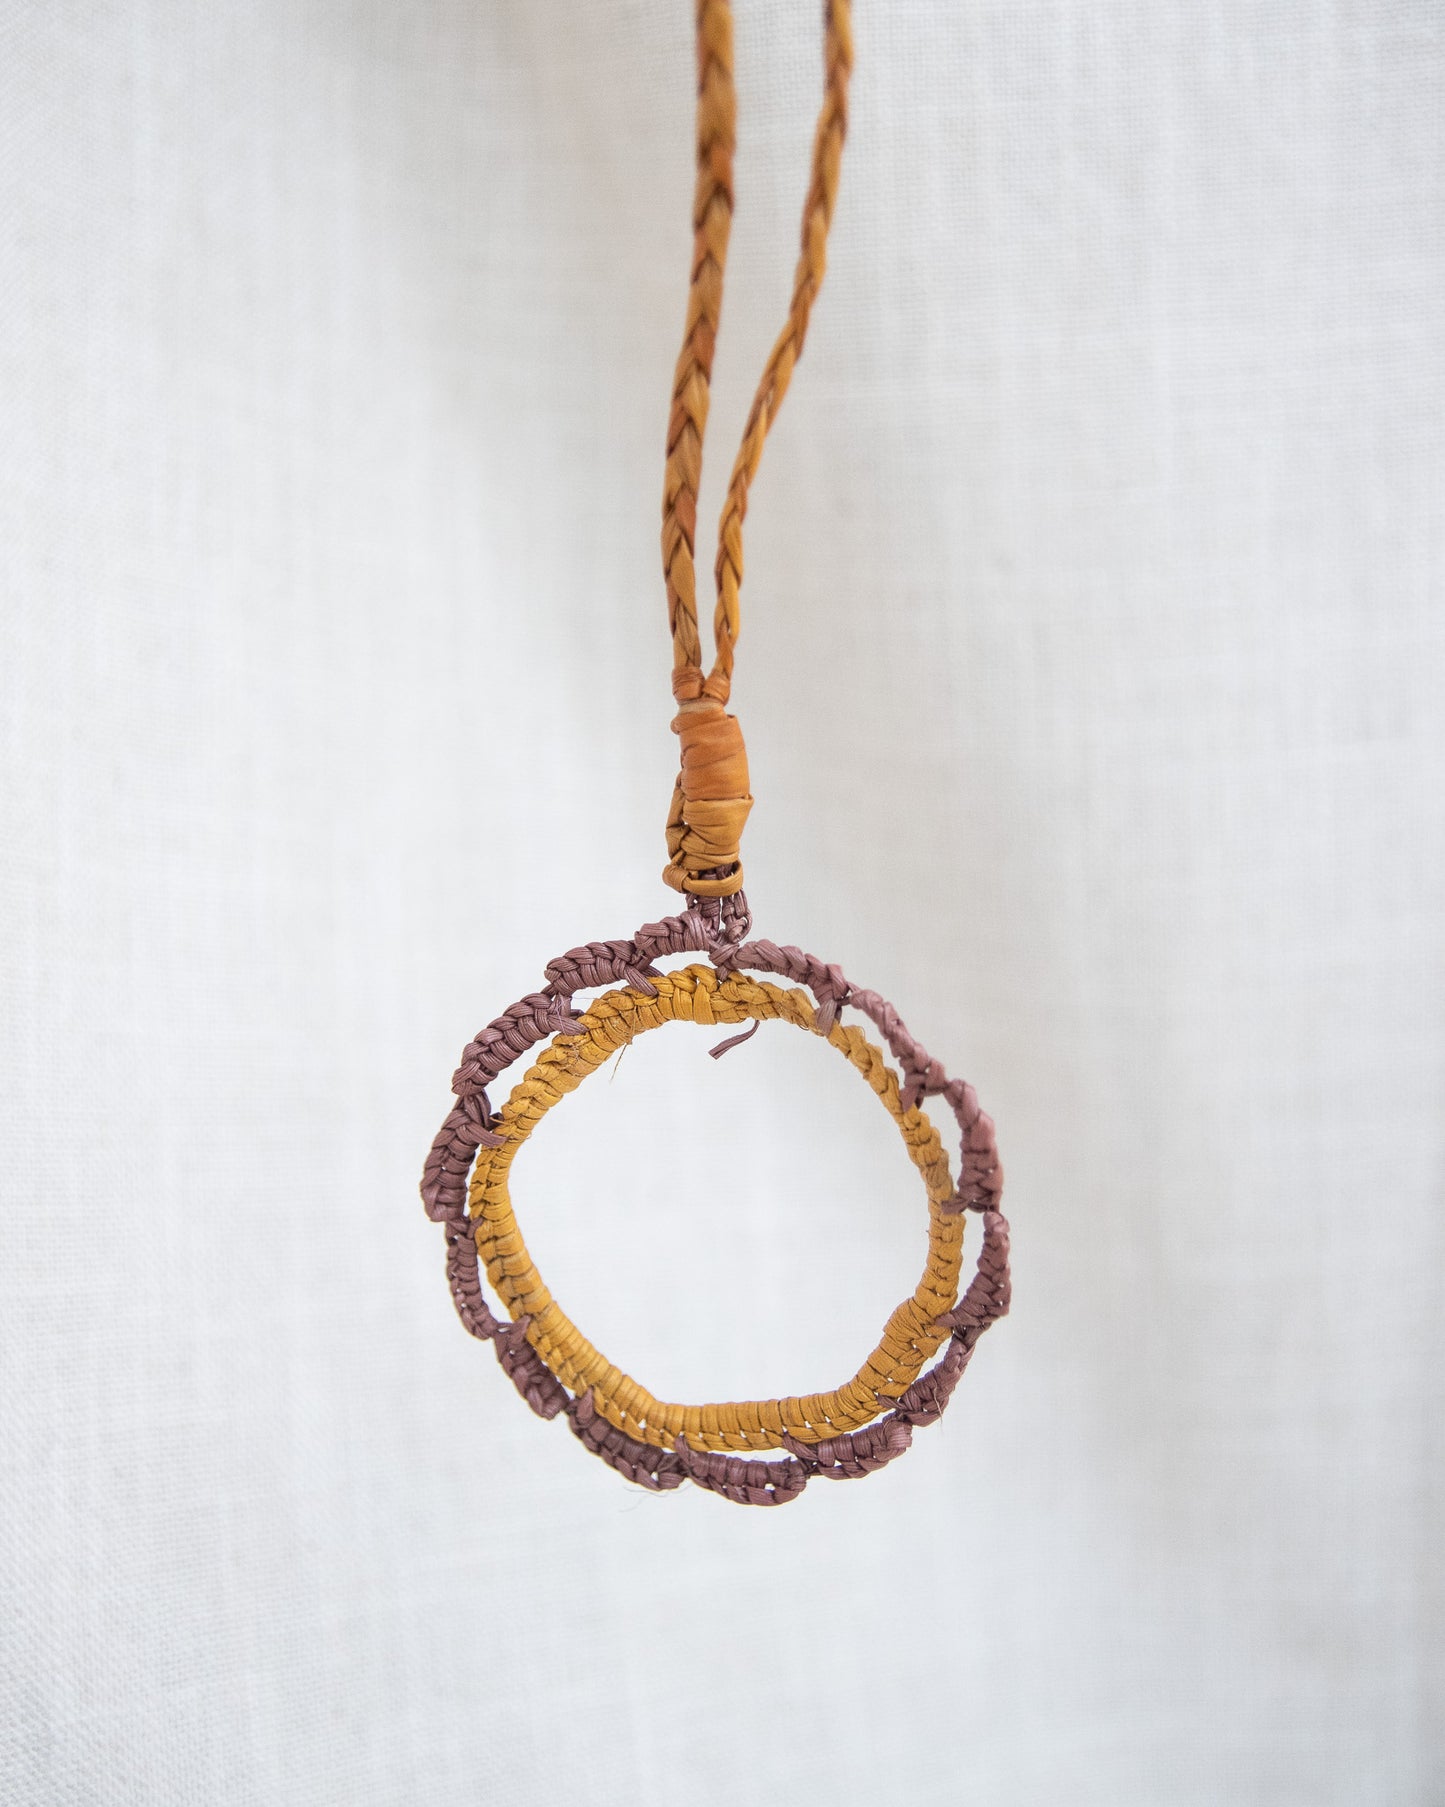 Aboriginal woven necklace